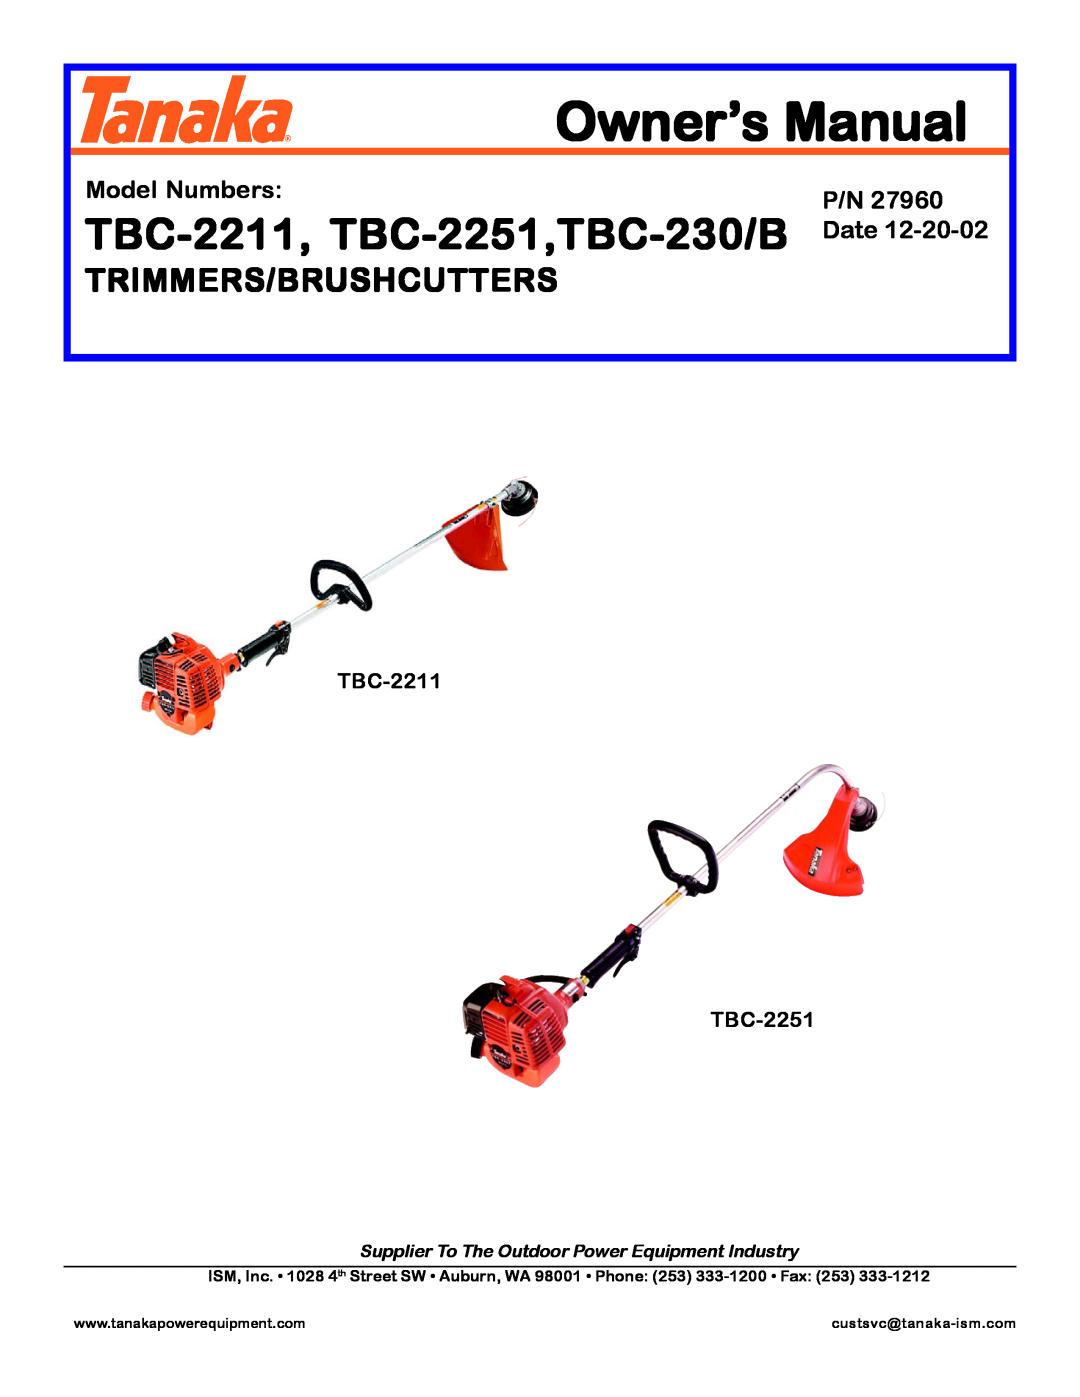 Tanaka TBC-230B manual Trimmers/Brushcutters, TBC-2211 TBC-2251, TBC-2211, TBC-2251,TBC-230/B, Model Numbers, Date 